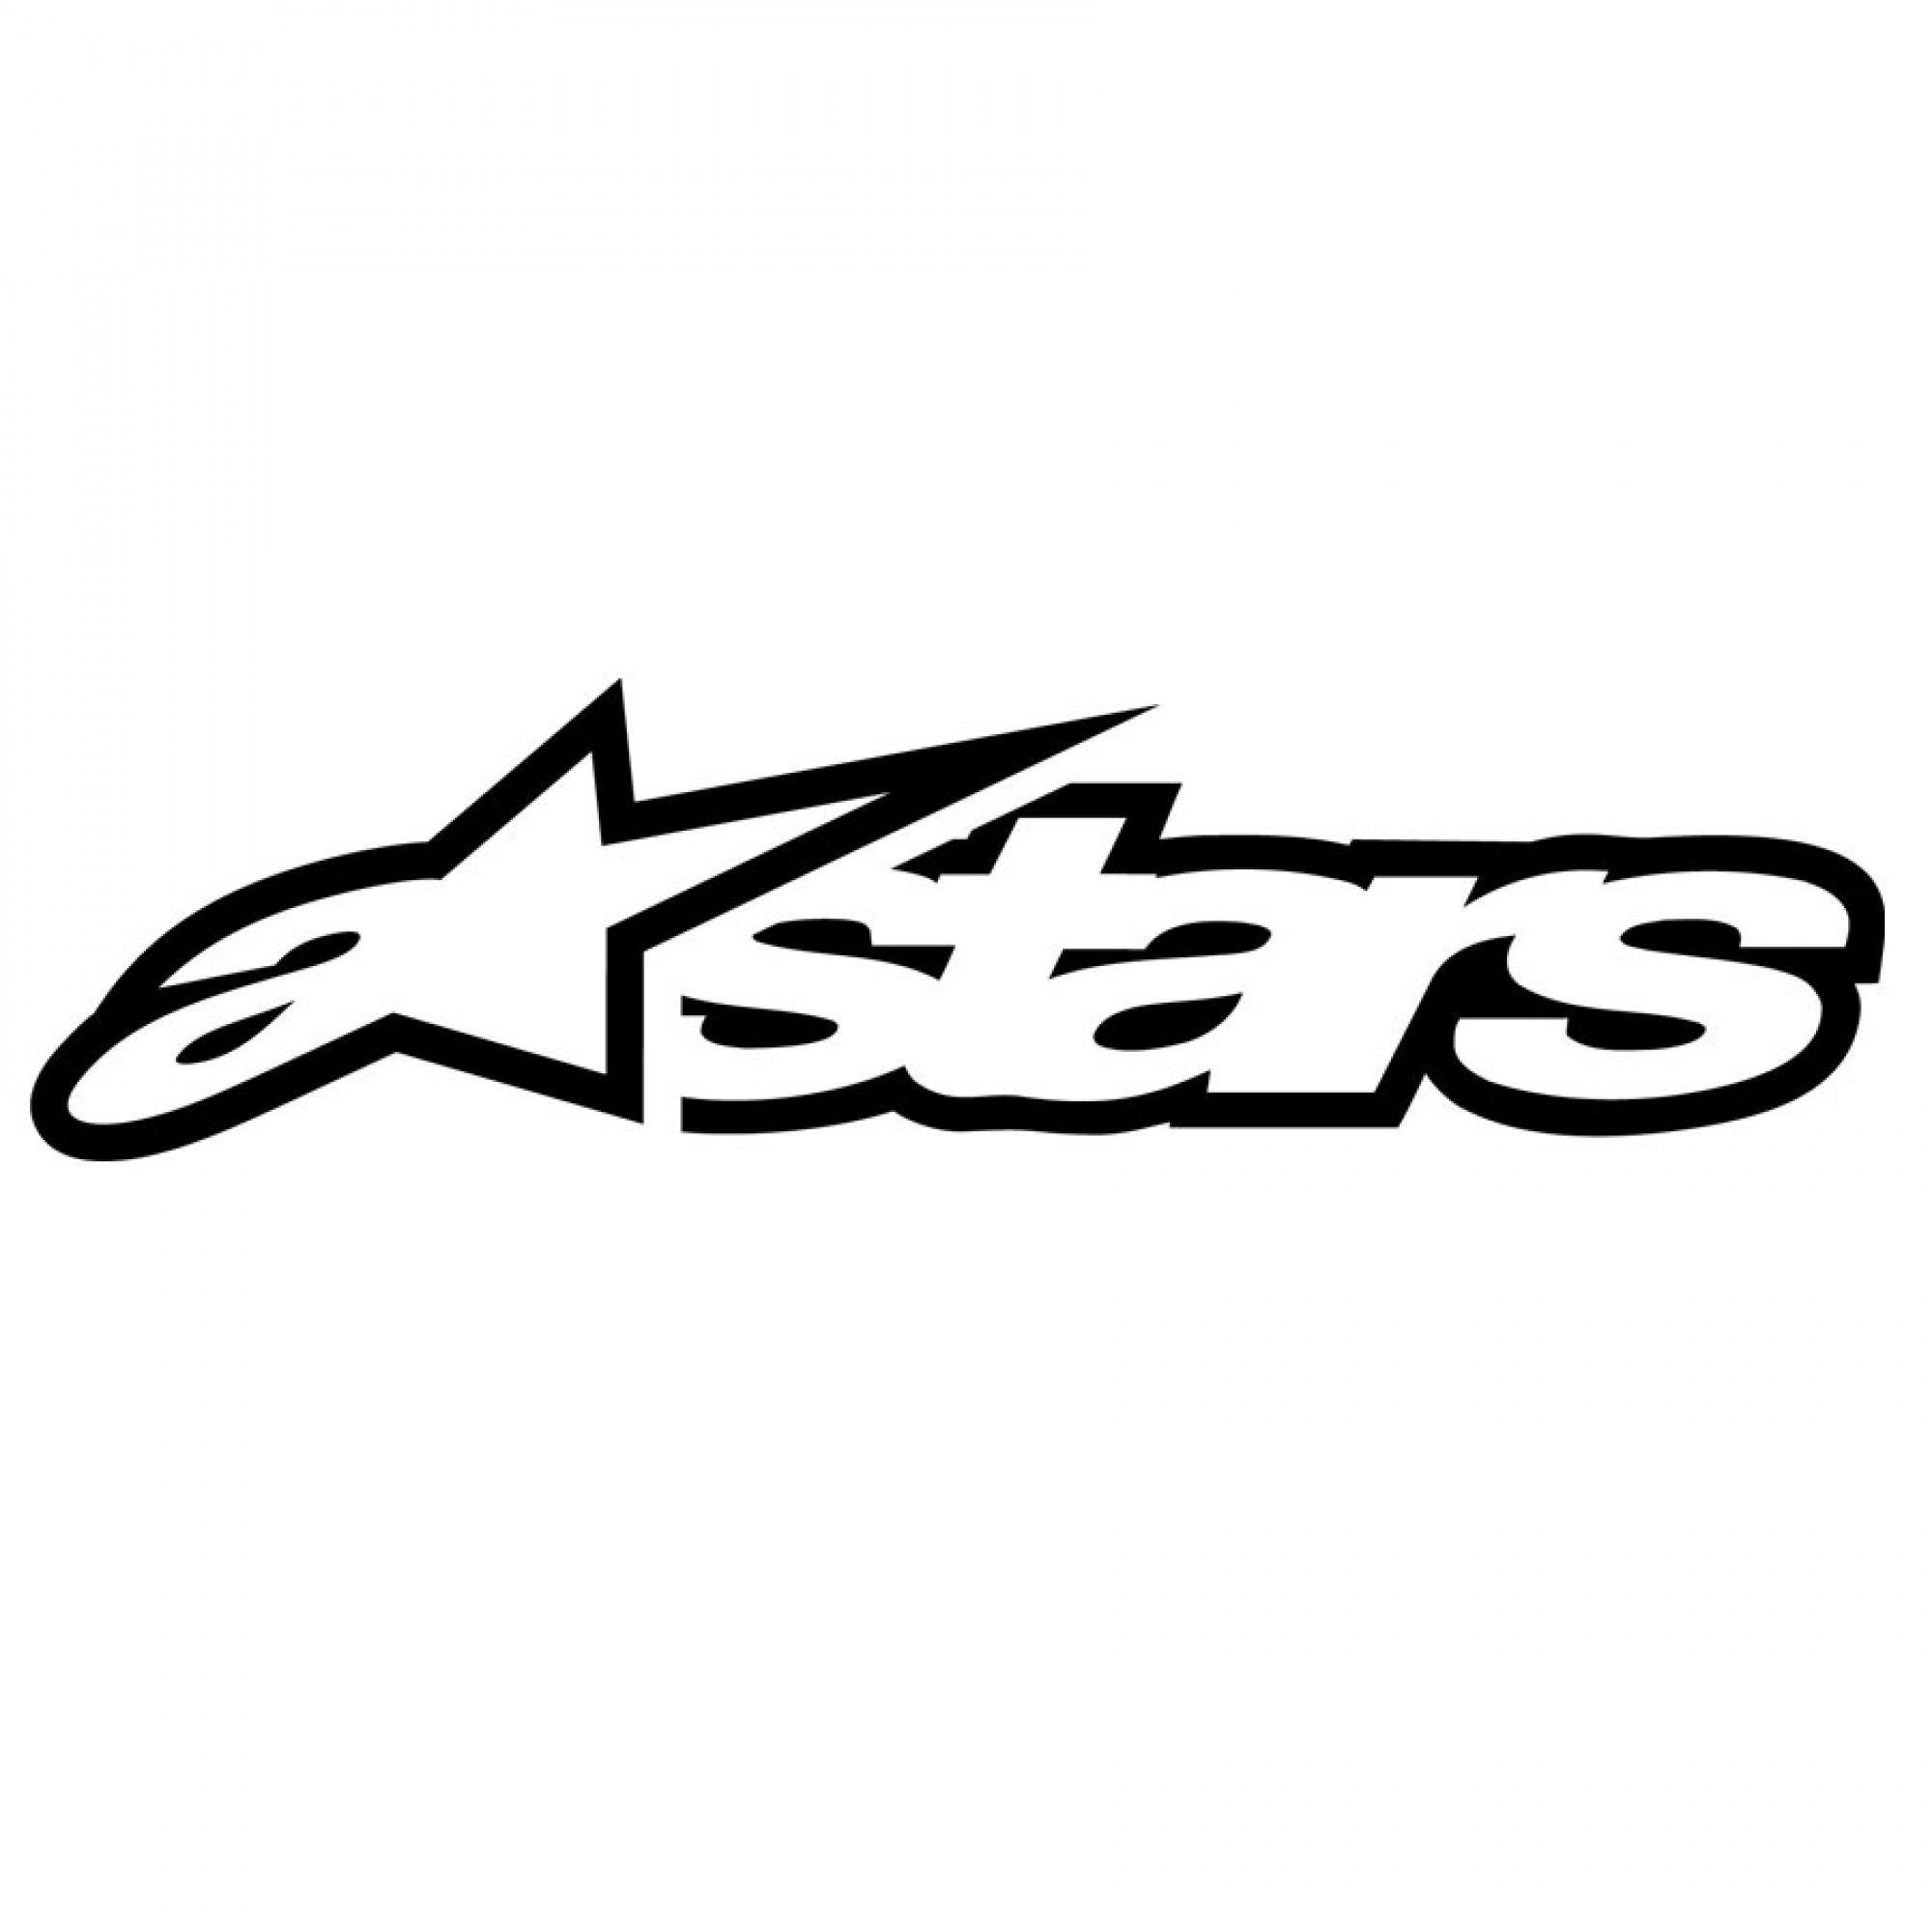 Alpinstar Logo - LogoDix